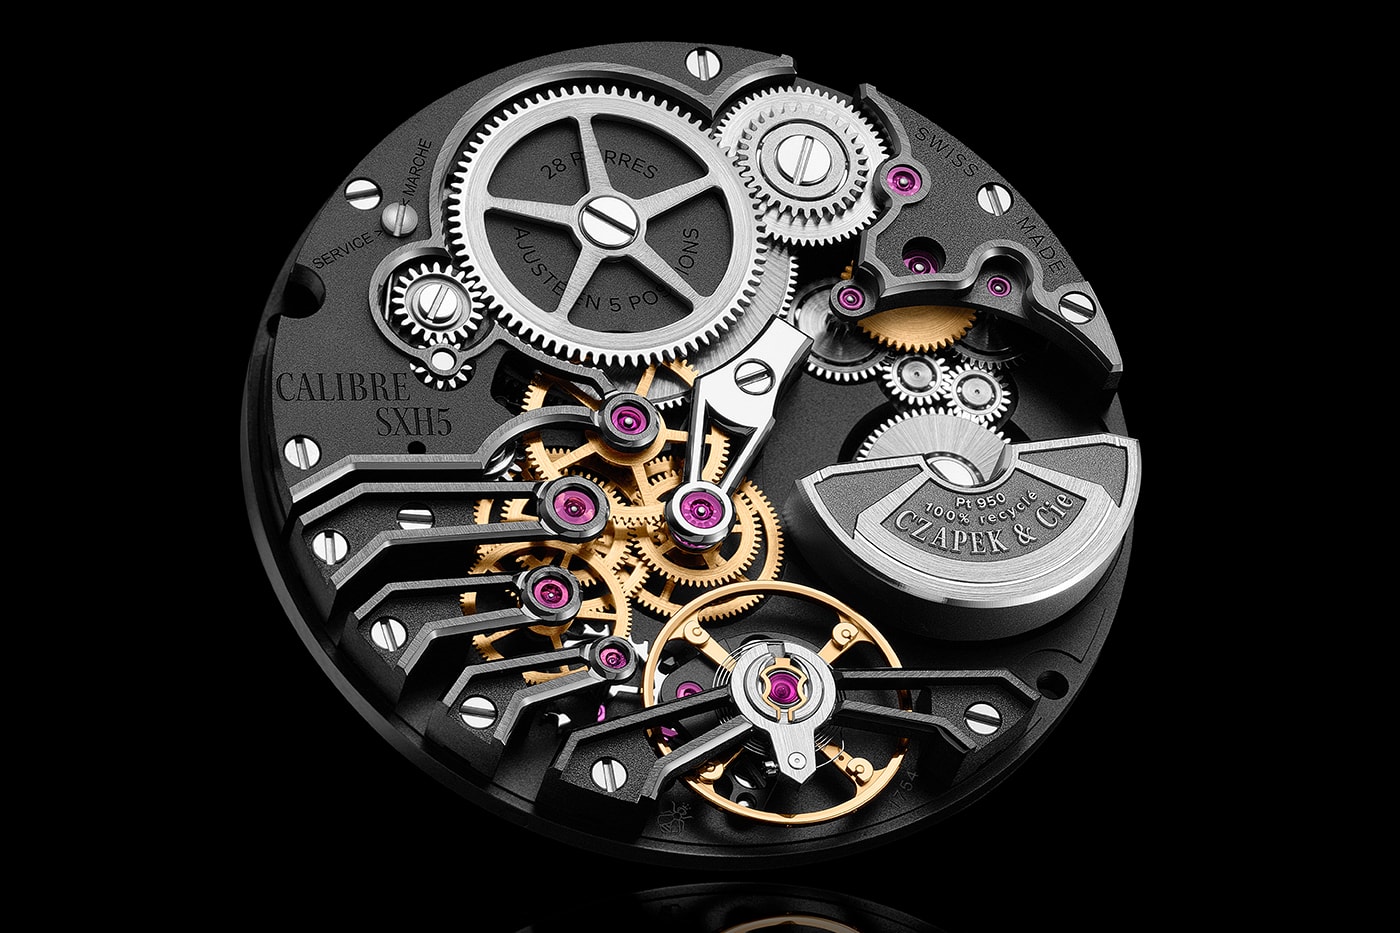 Czapek Reveals Four New Antarctique Timepieces at Watches & Wonders 2023